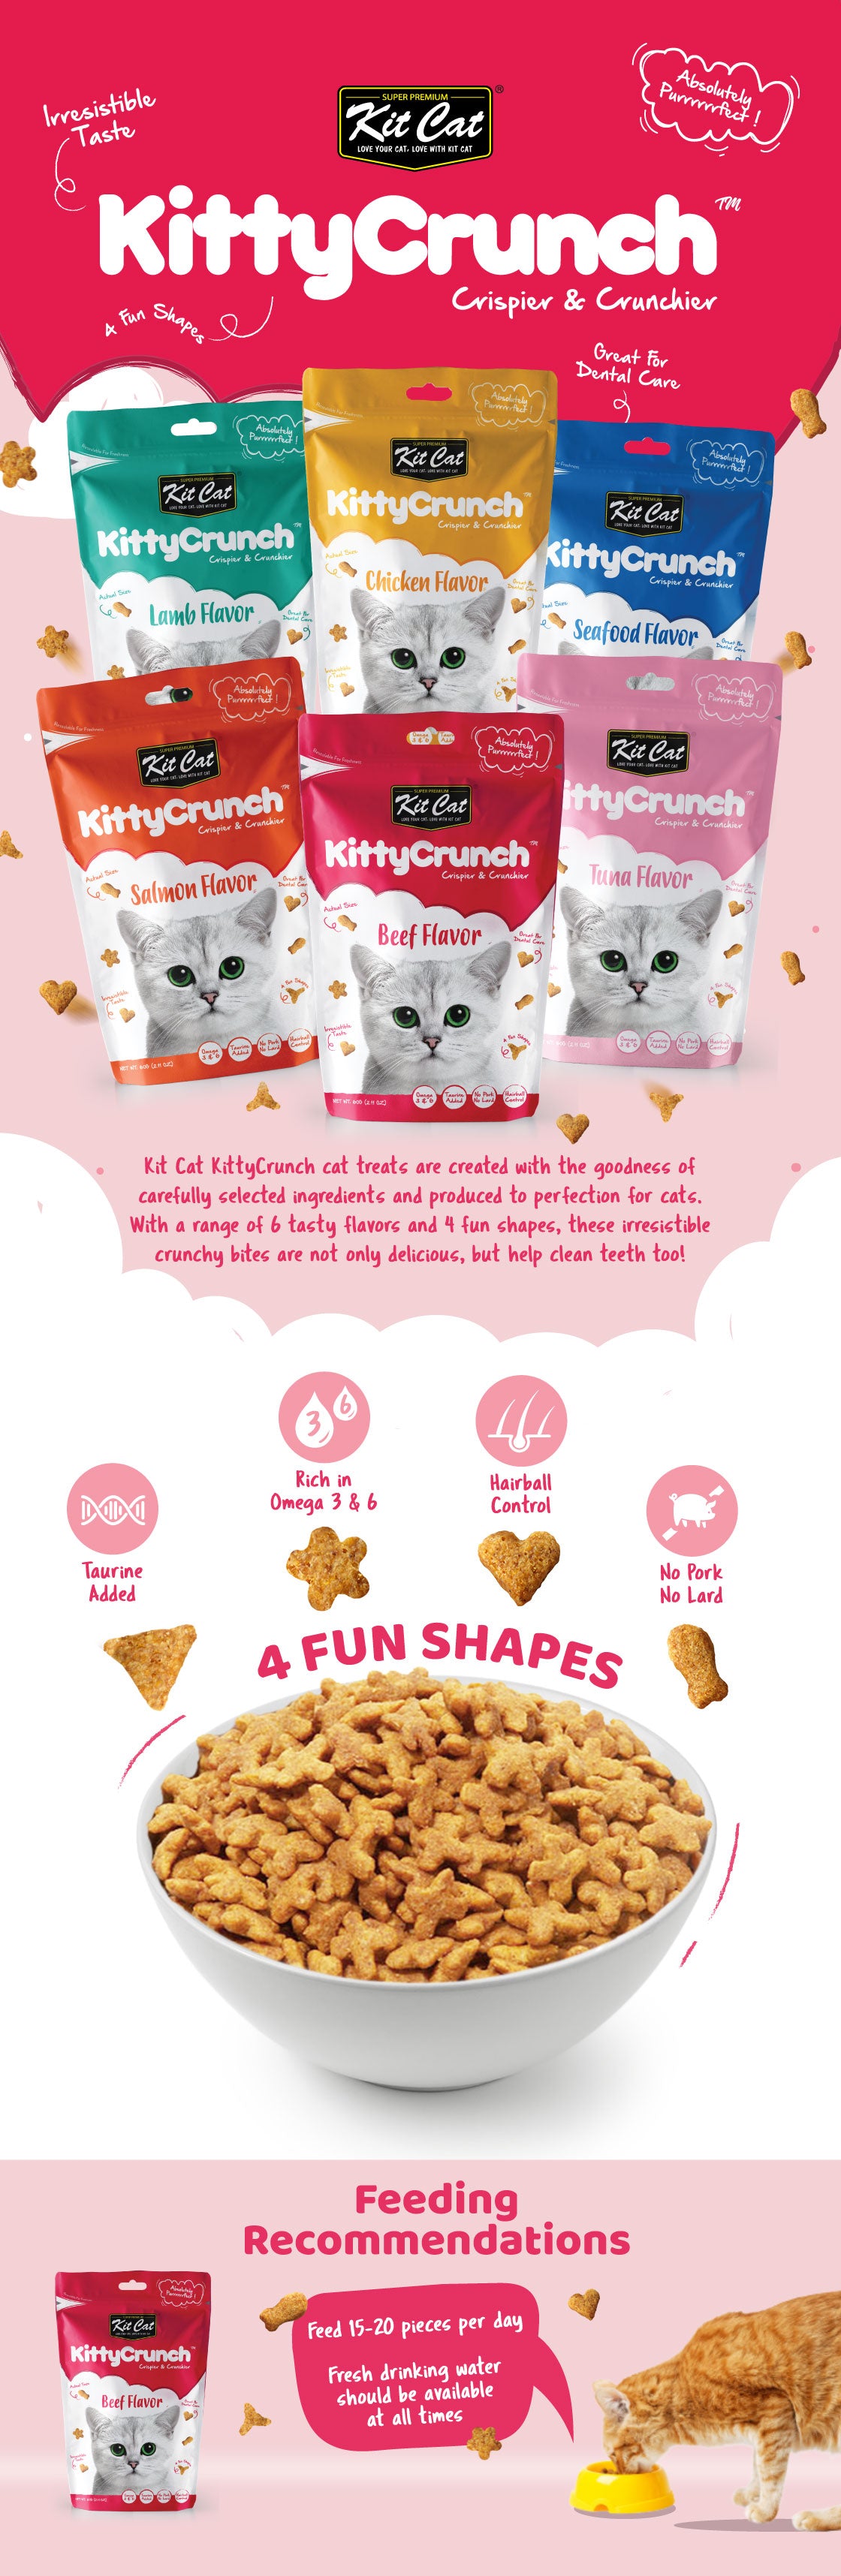 Kit Cat Kitty Crunch Cat Treats - Beef (60g)